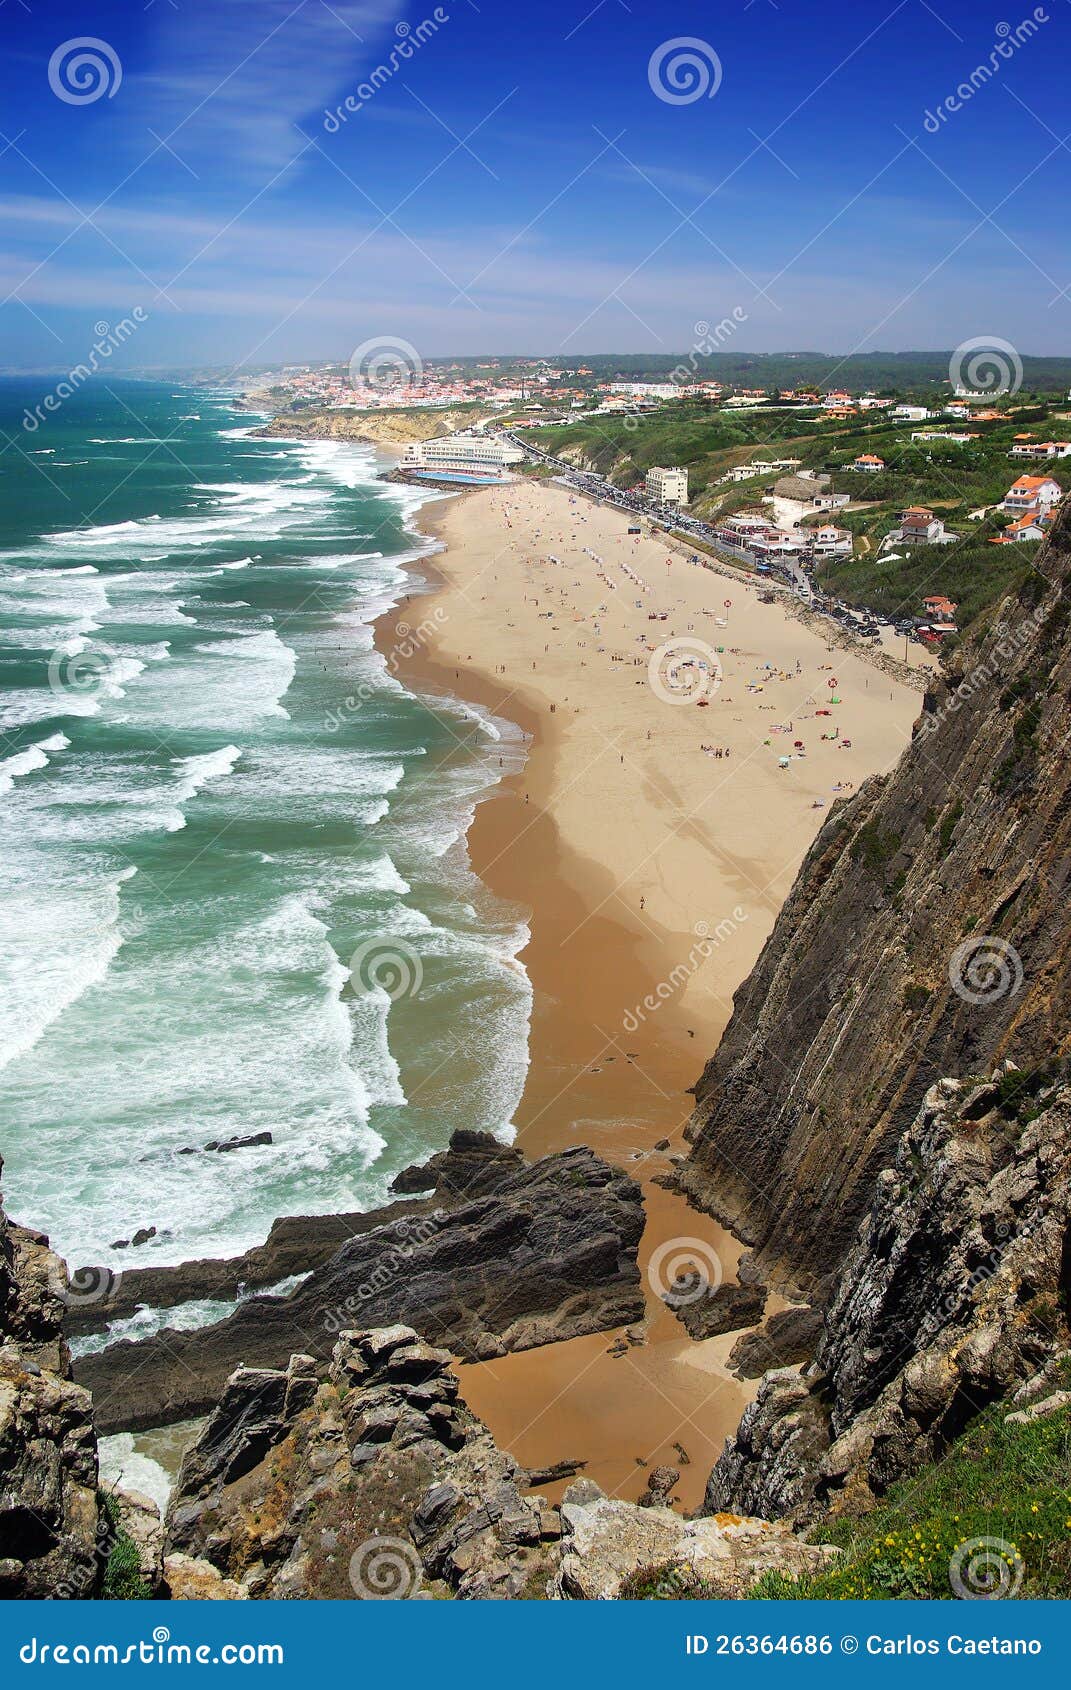 coastal cliffs